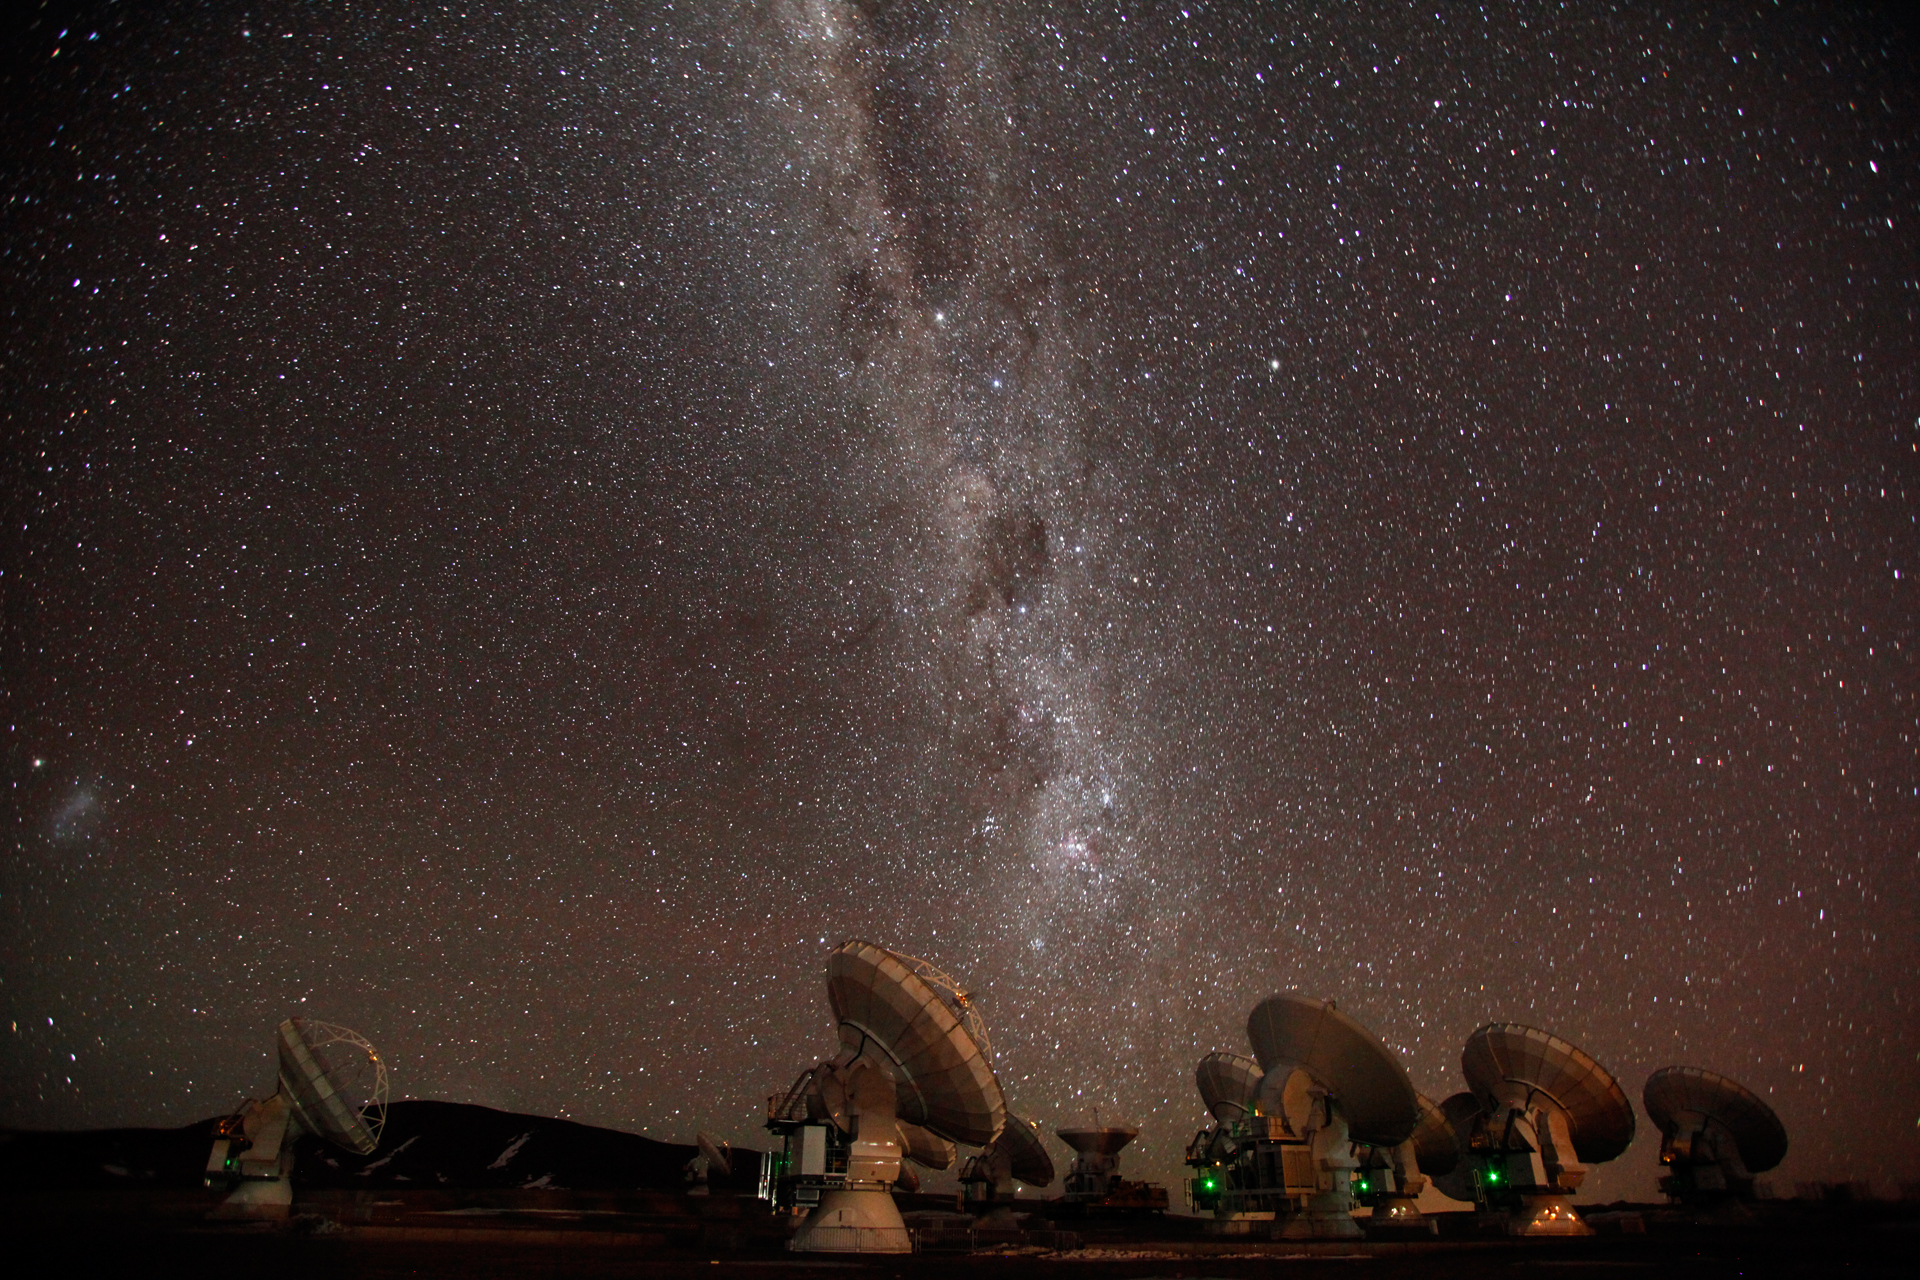 ALMA antennas and the Milky Way